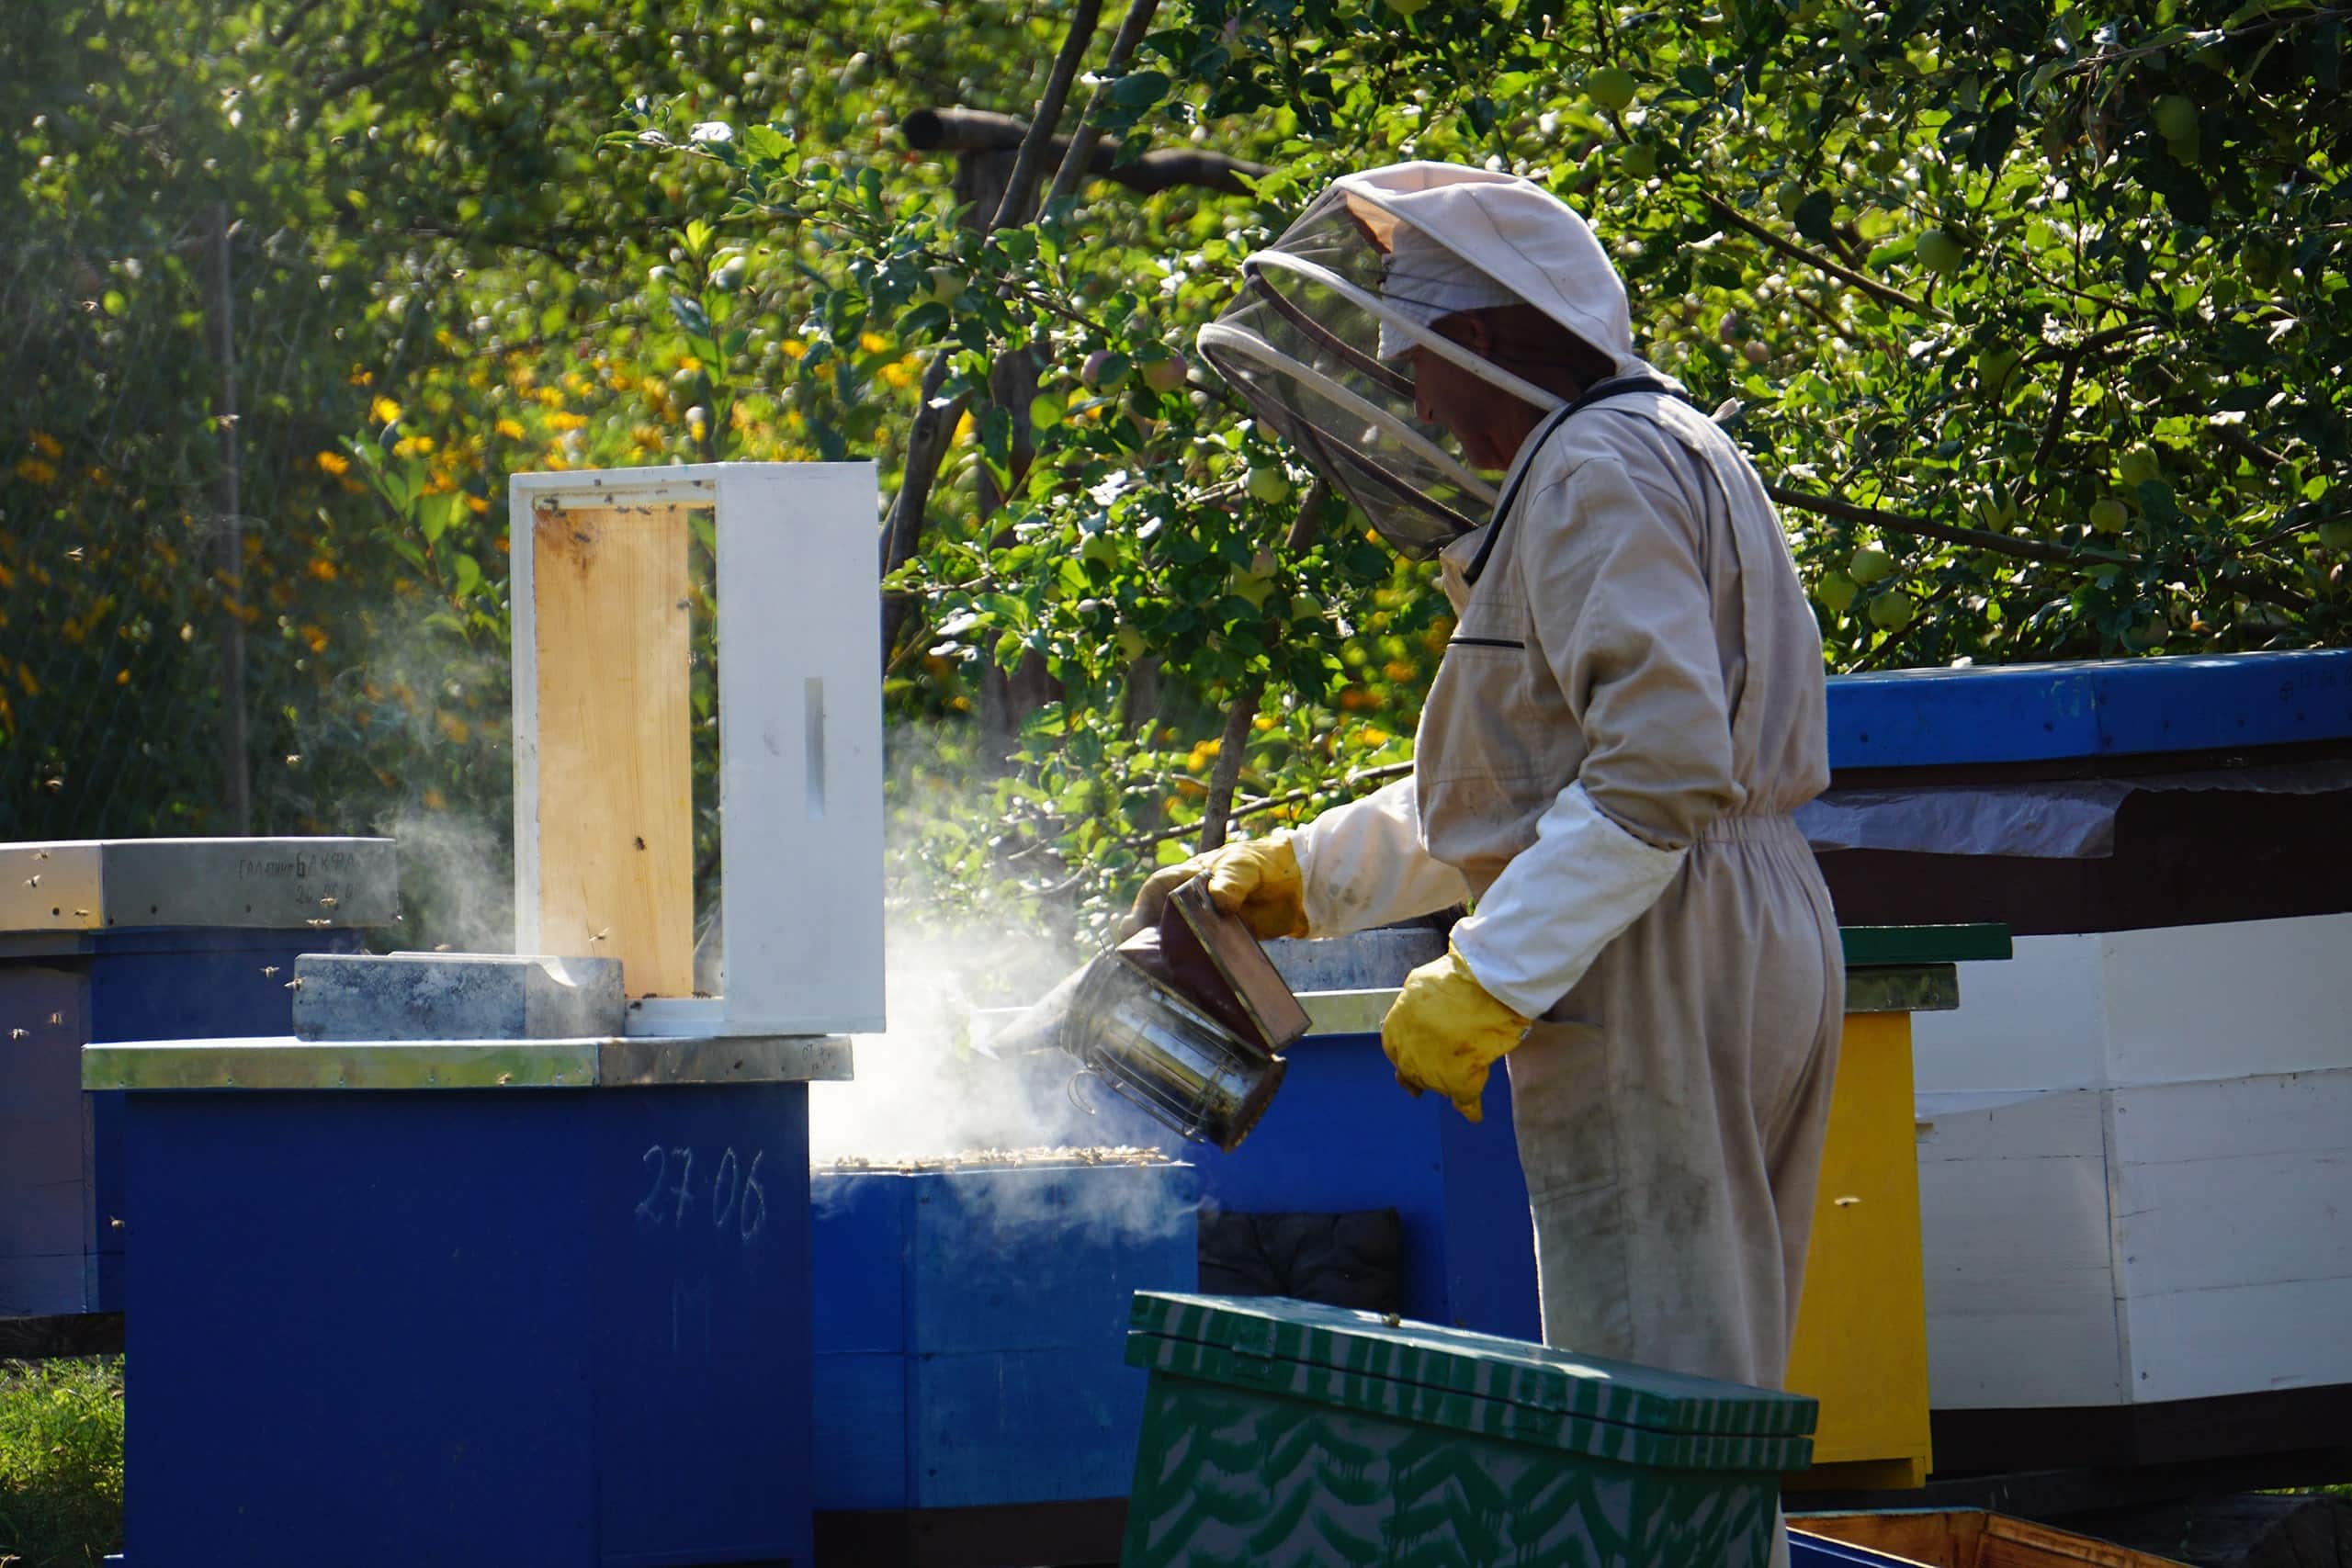 Beekeeper using Smoke to Calm Bees